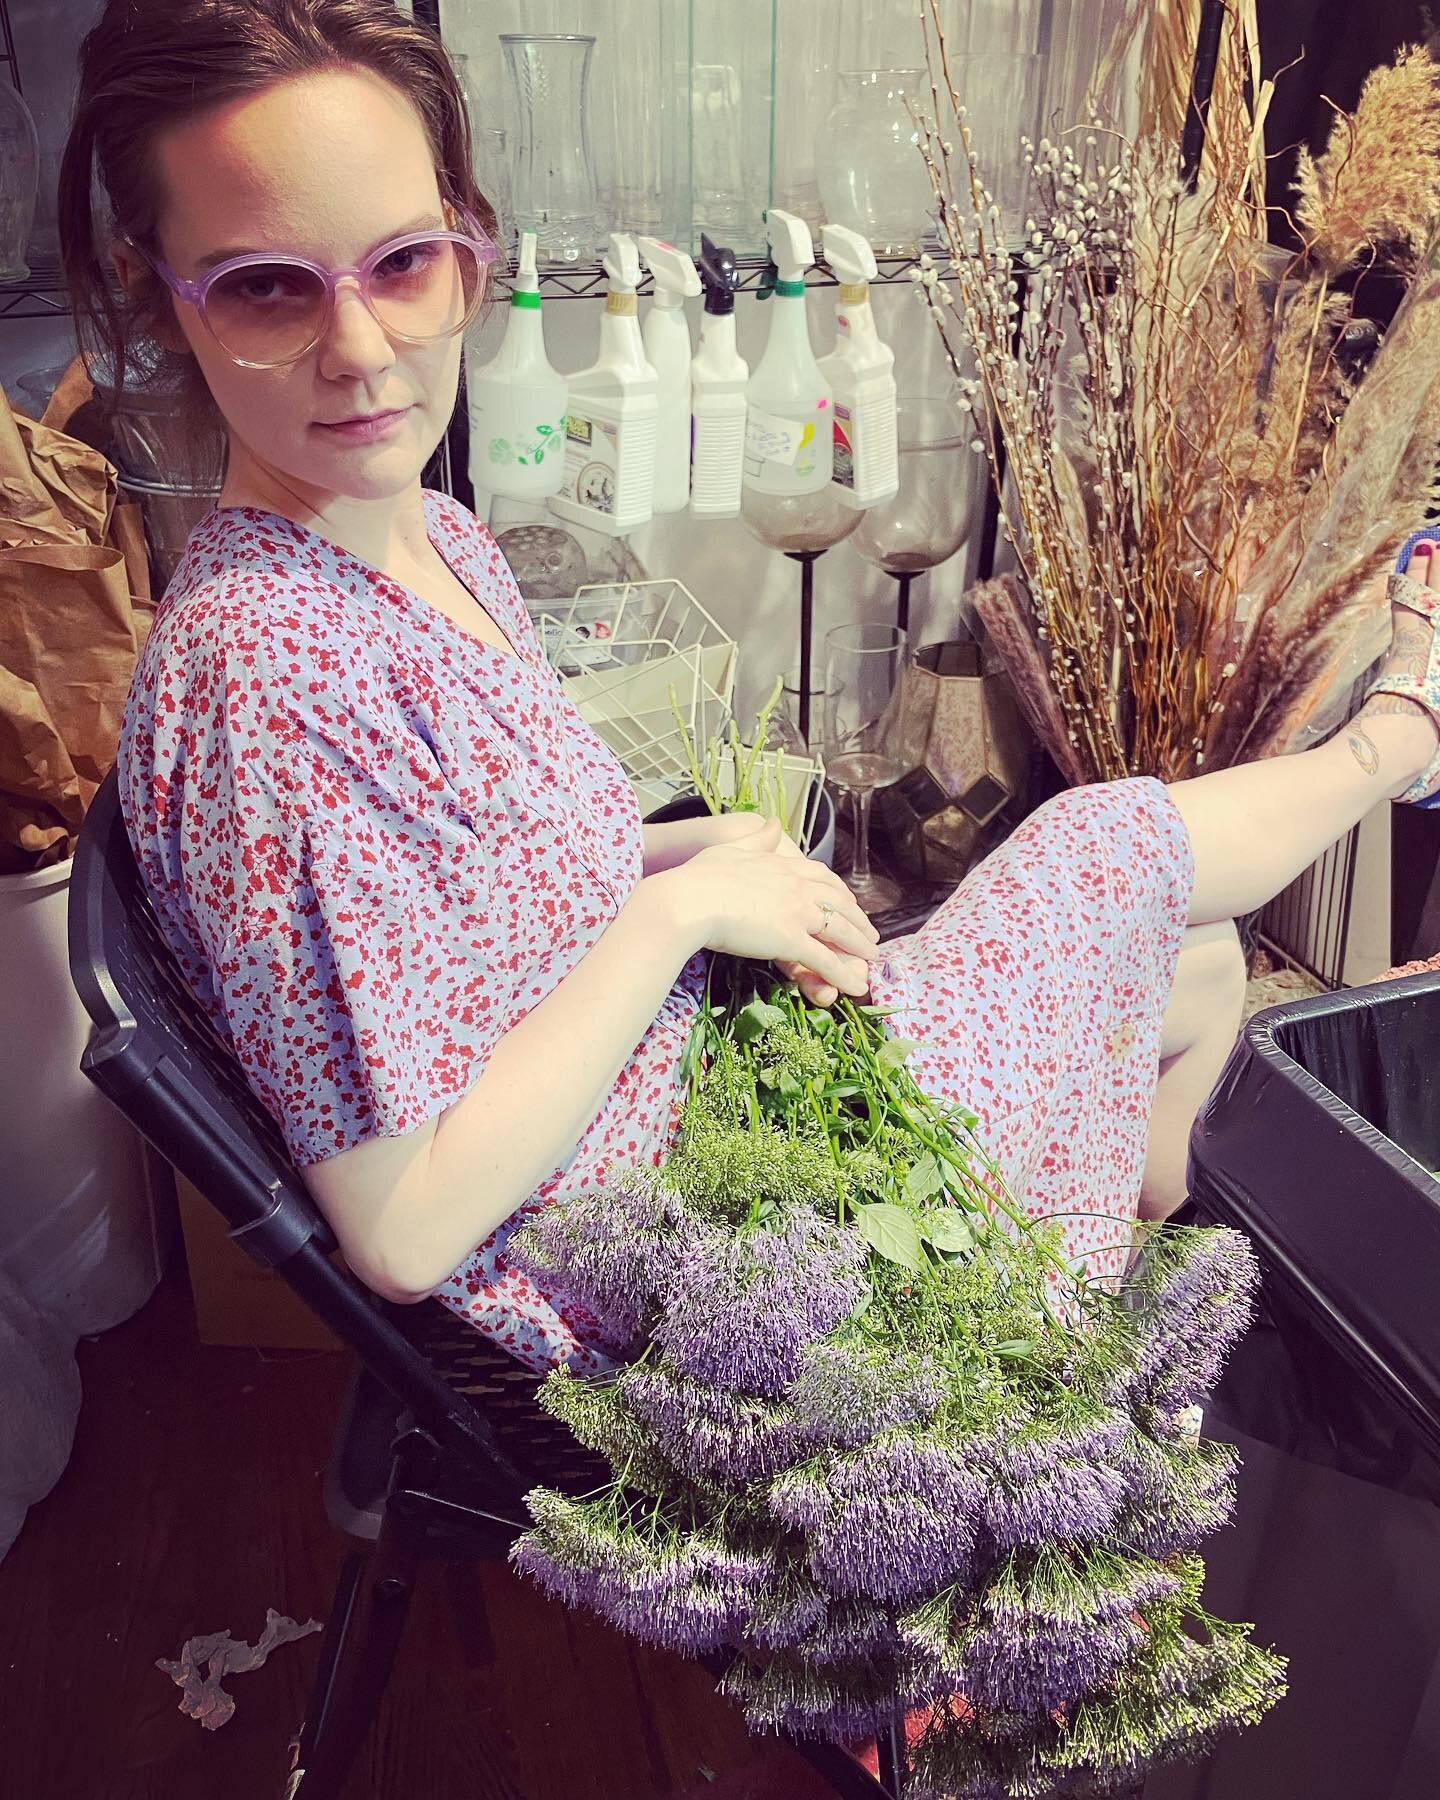 Live in color, start with lavender! 

#mossyfern #allthingsplants